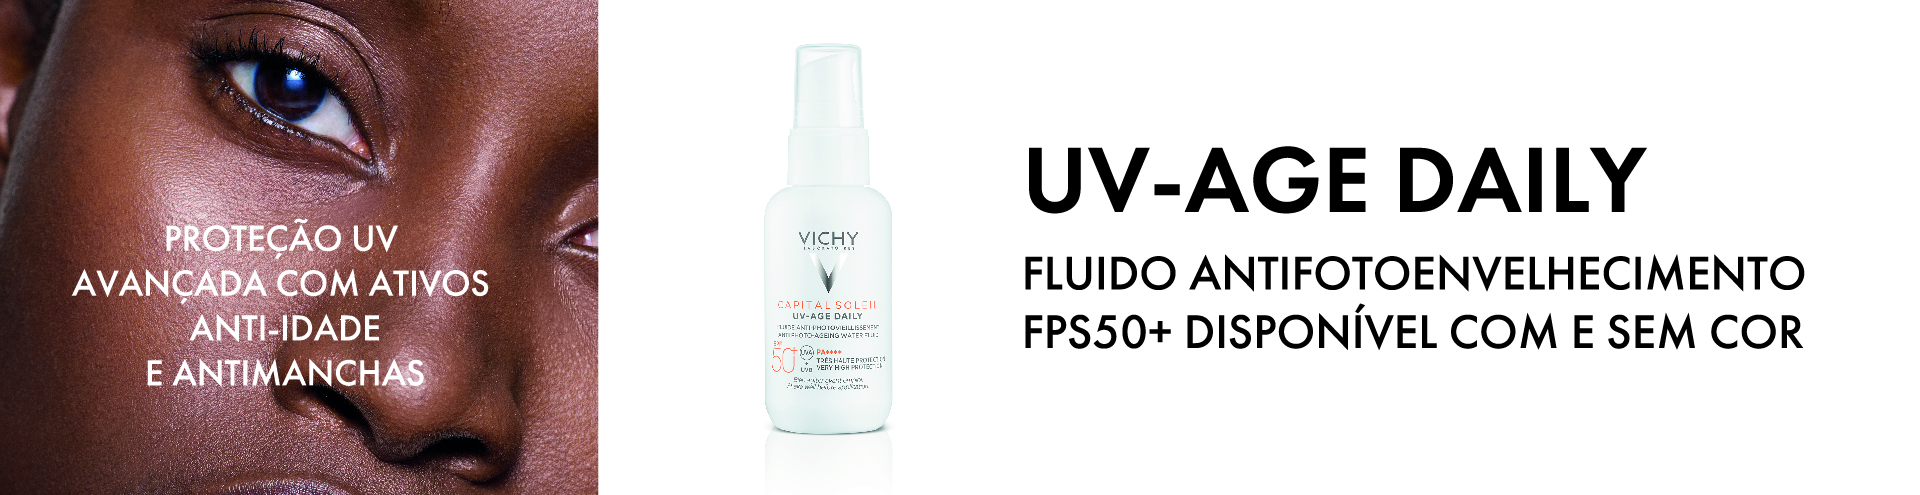 Vichy UV-Age